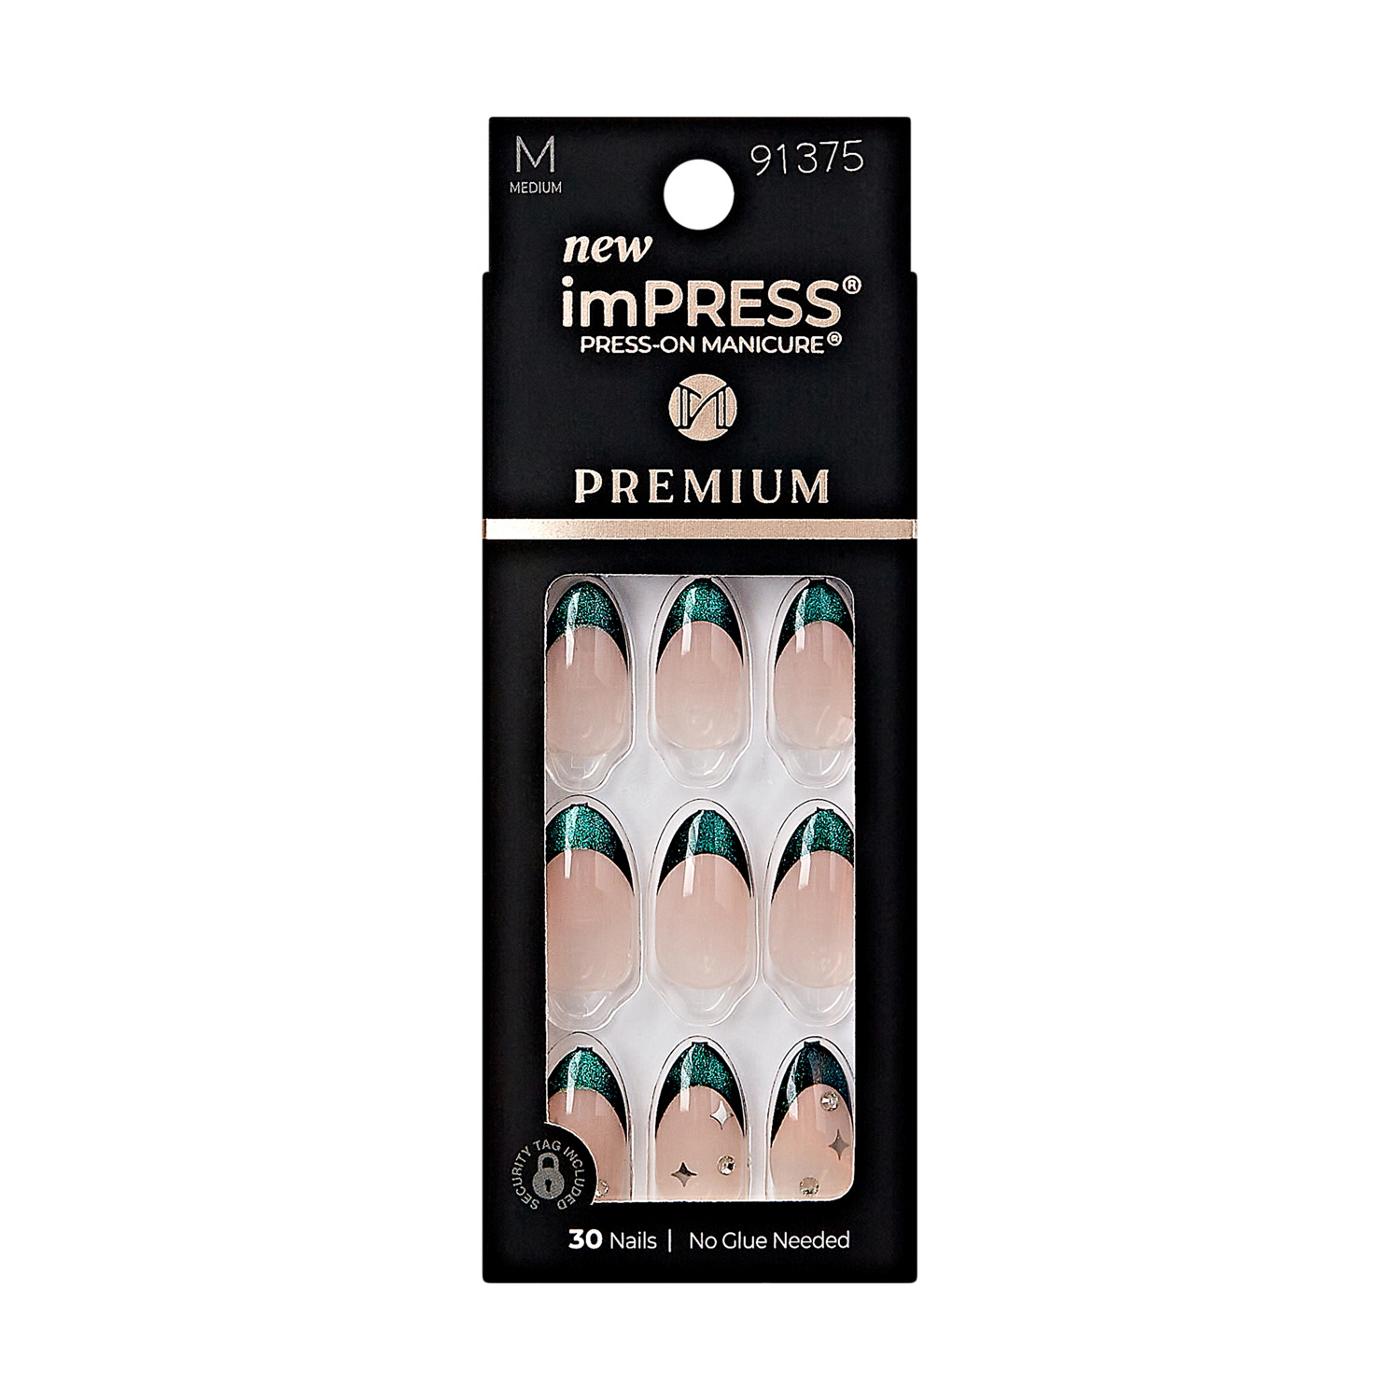 KISS imPRESS Premium Press-On Manicure - Visions; image 1 of 7